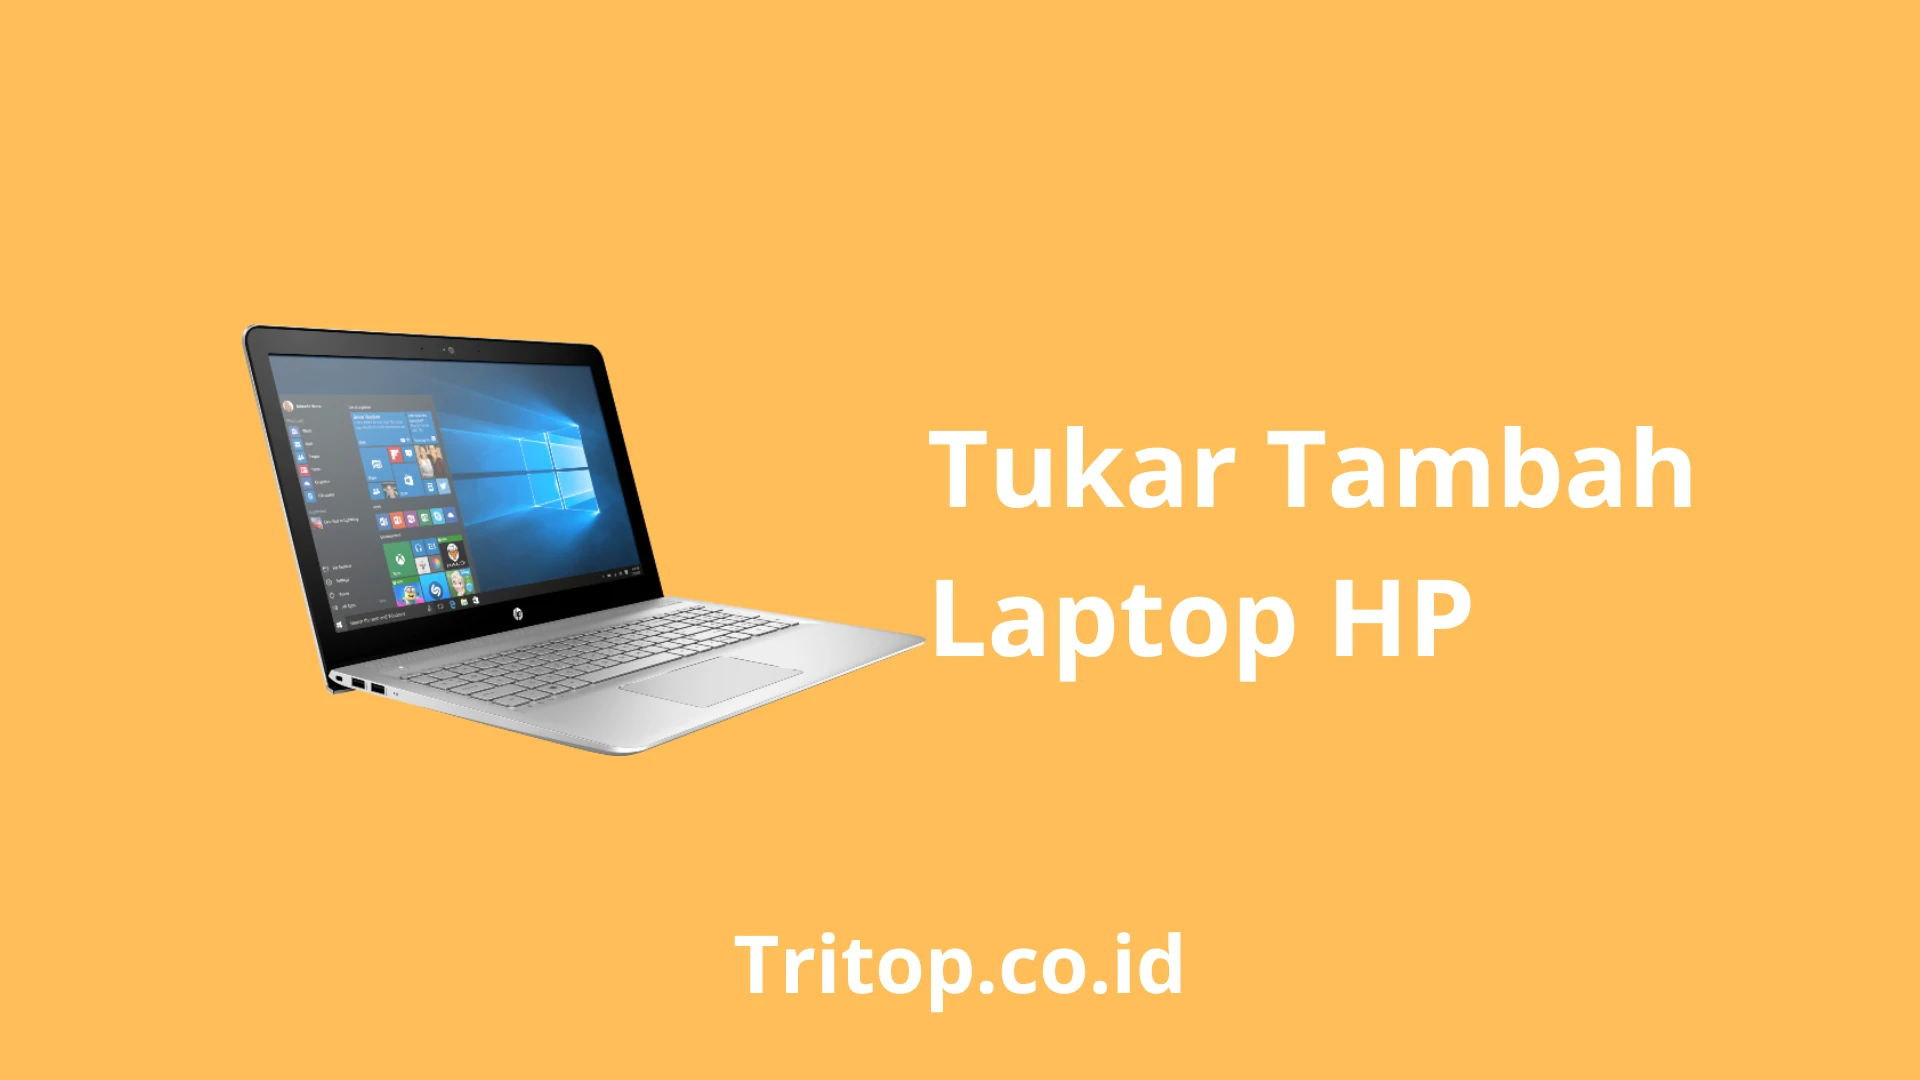 Tukar Tambah Laptop HP Tritop.co.id